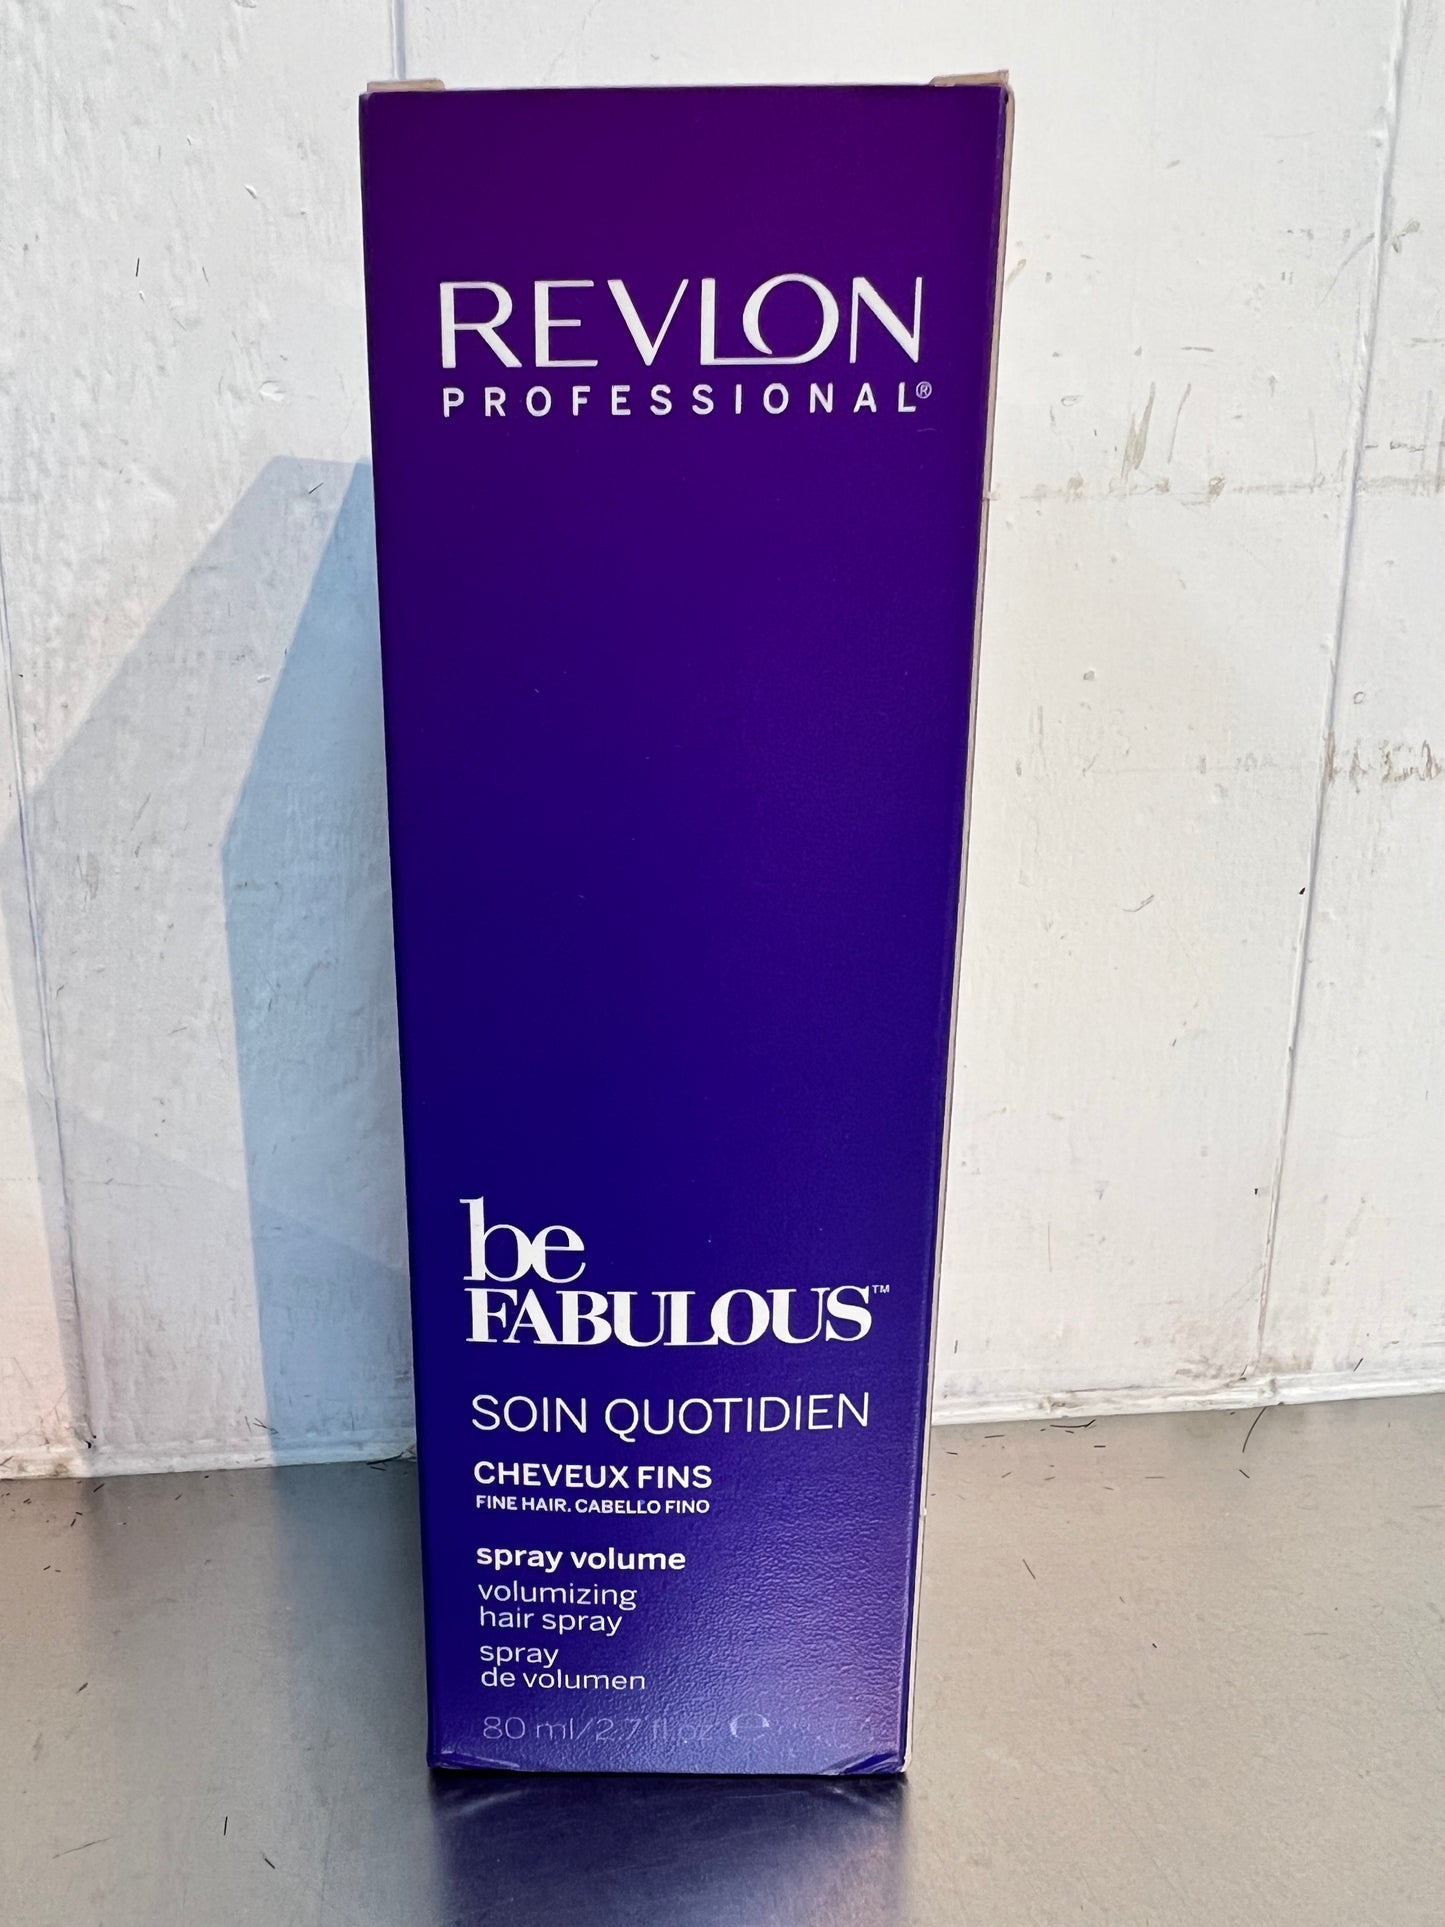 Revlon Be Fabulous Fine Hair Cabello find Volumizing Hair Spray 80ml